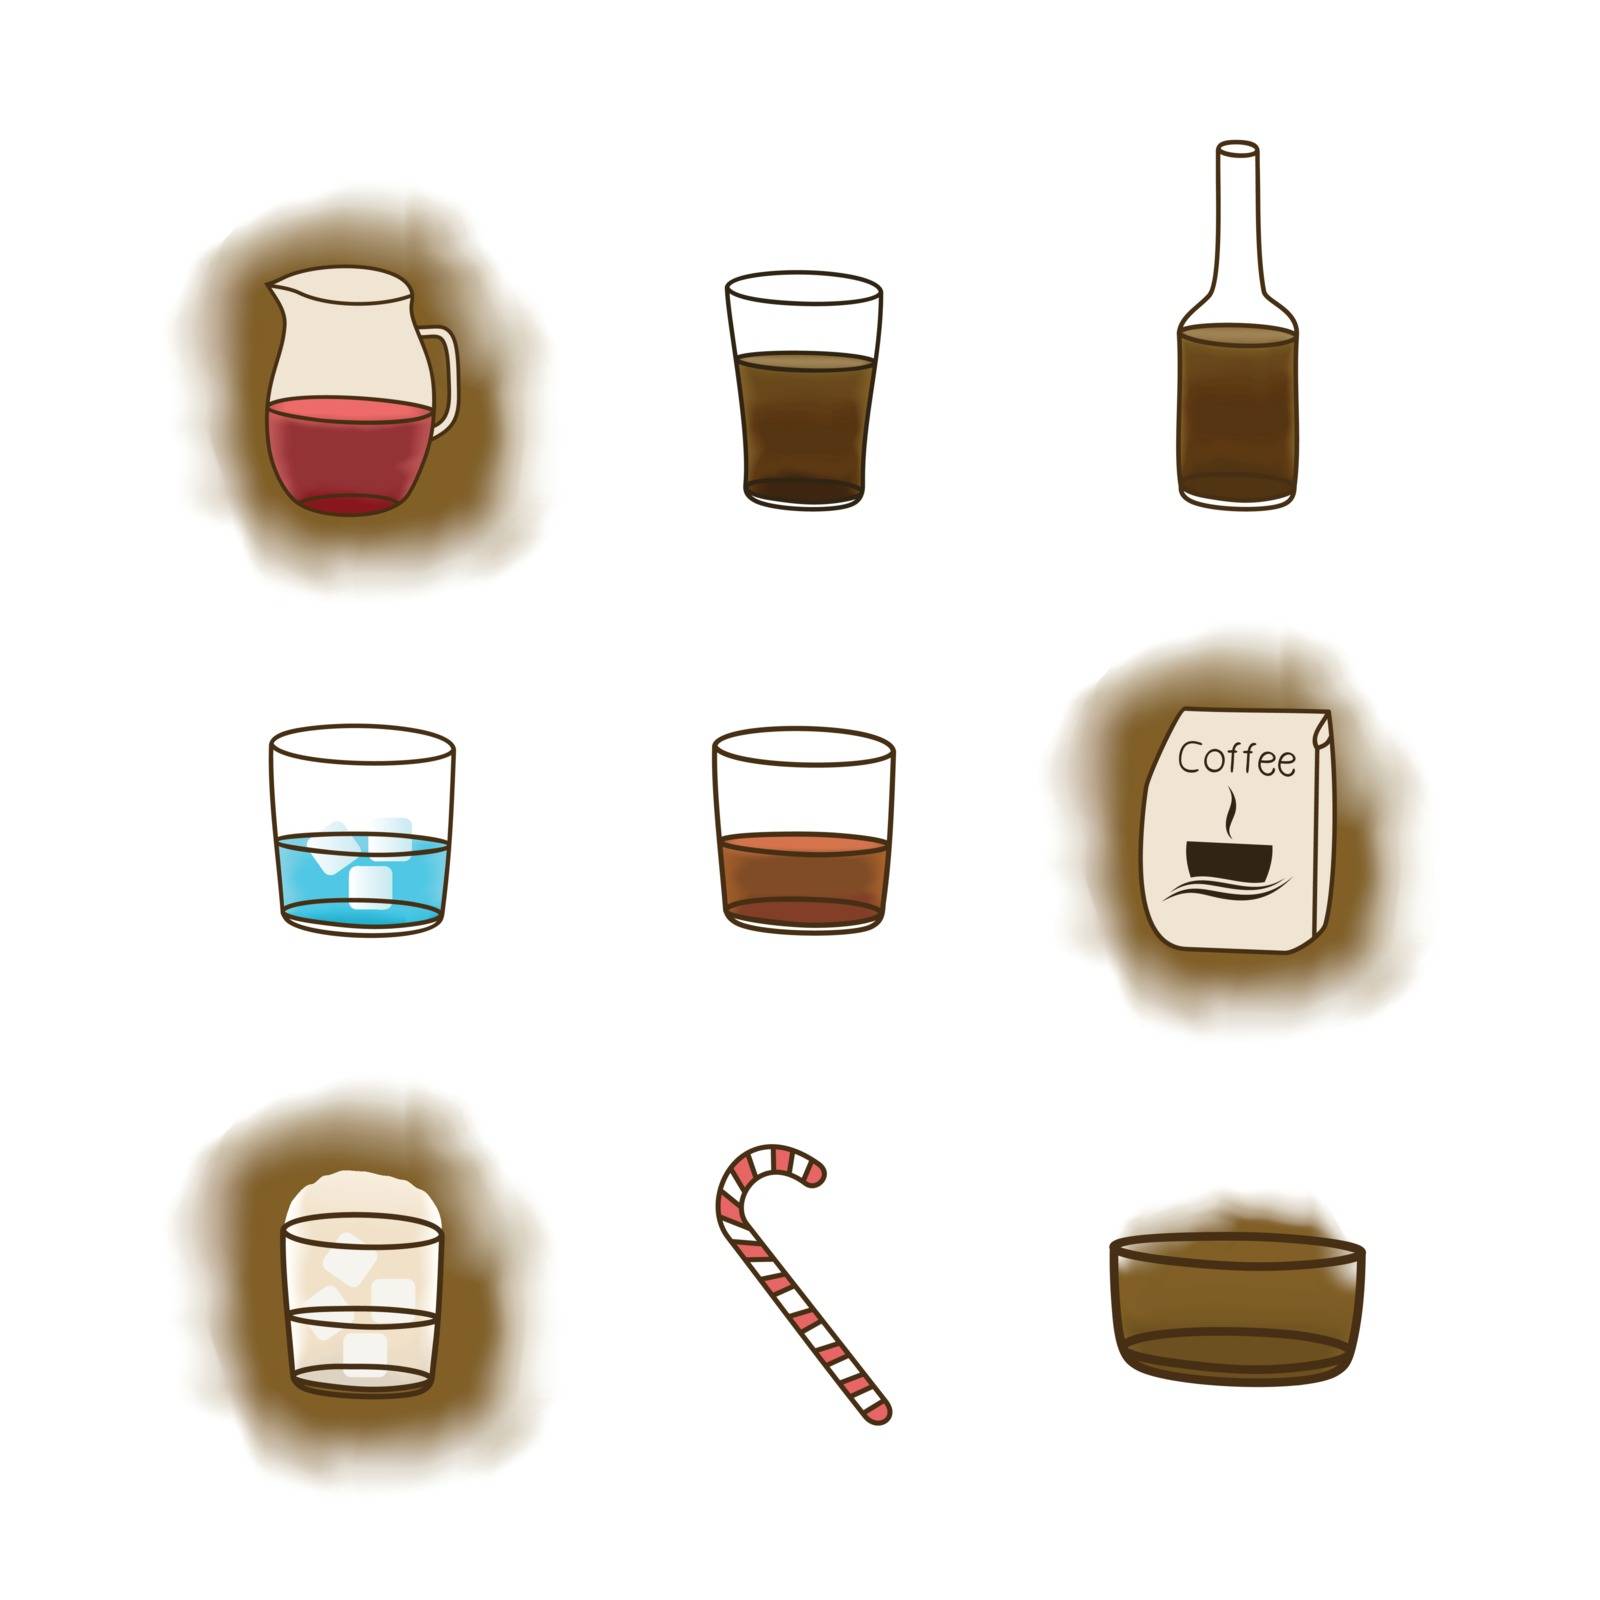 Coffee icon3 by aleksander1